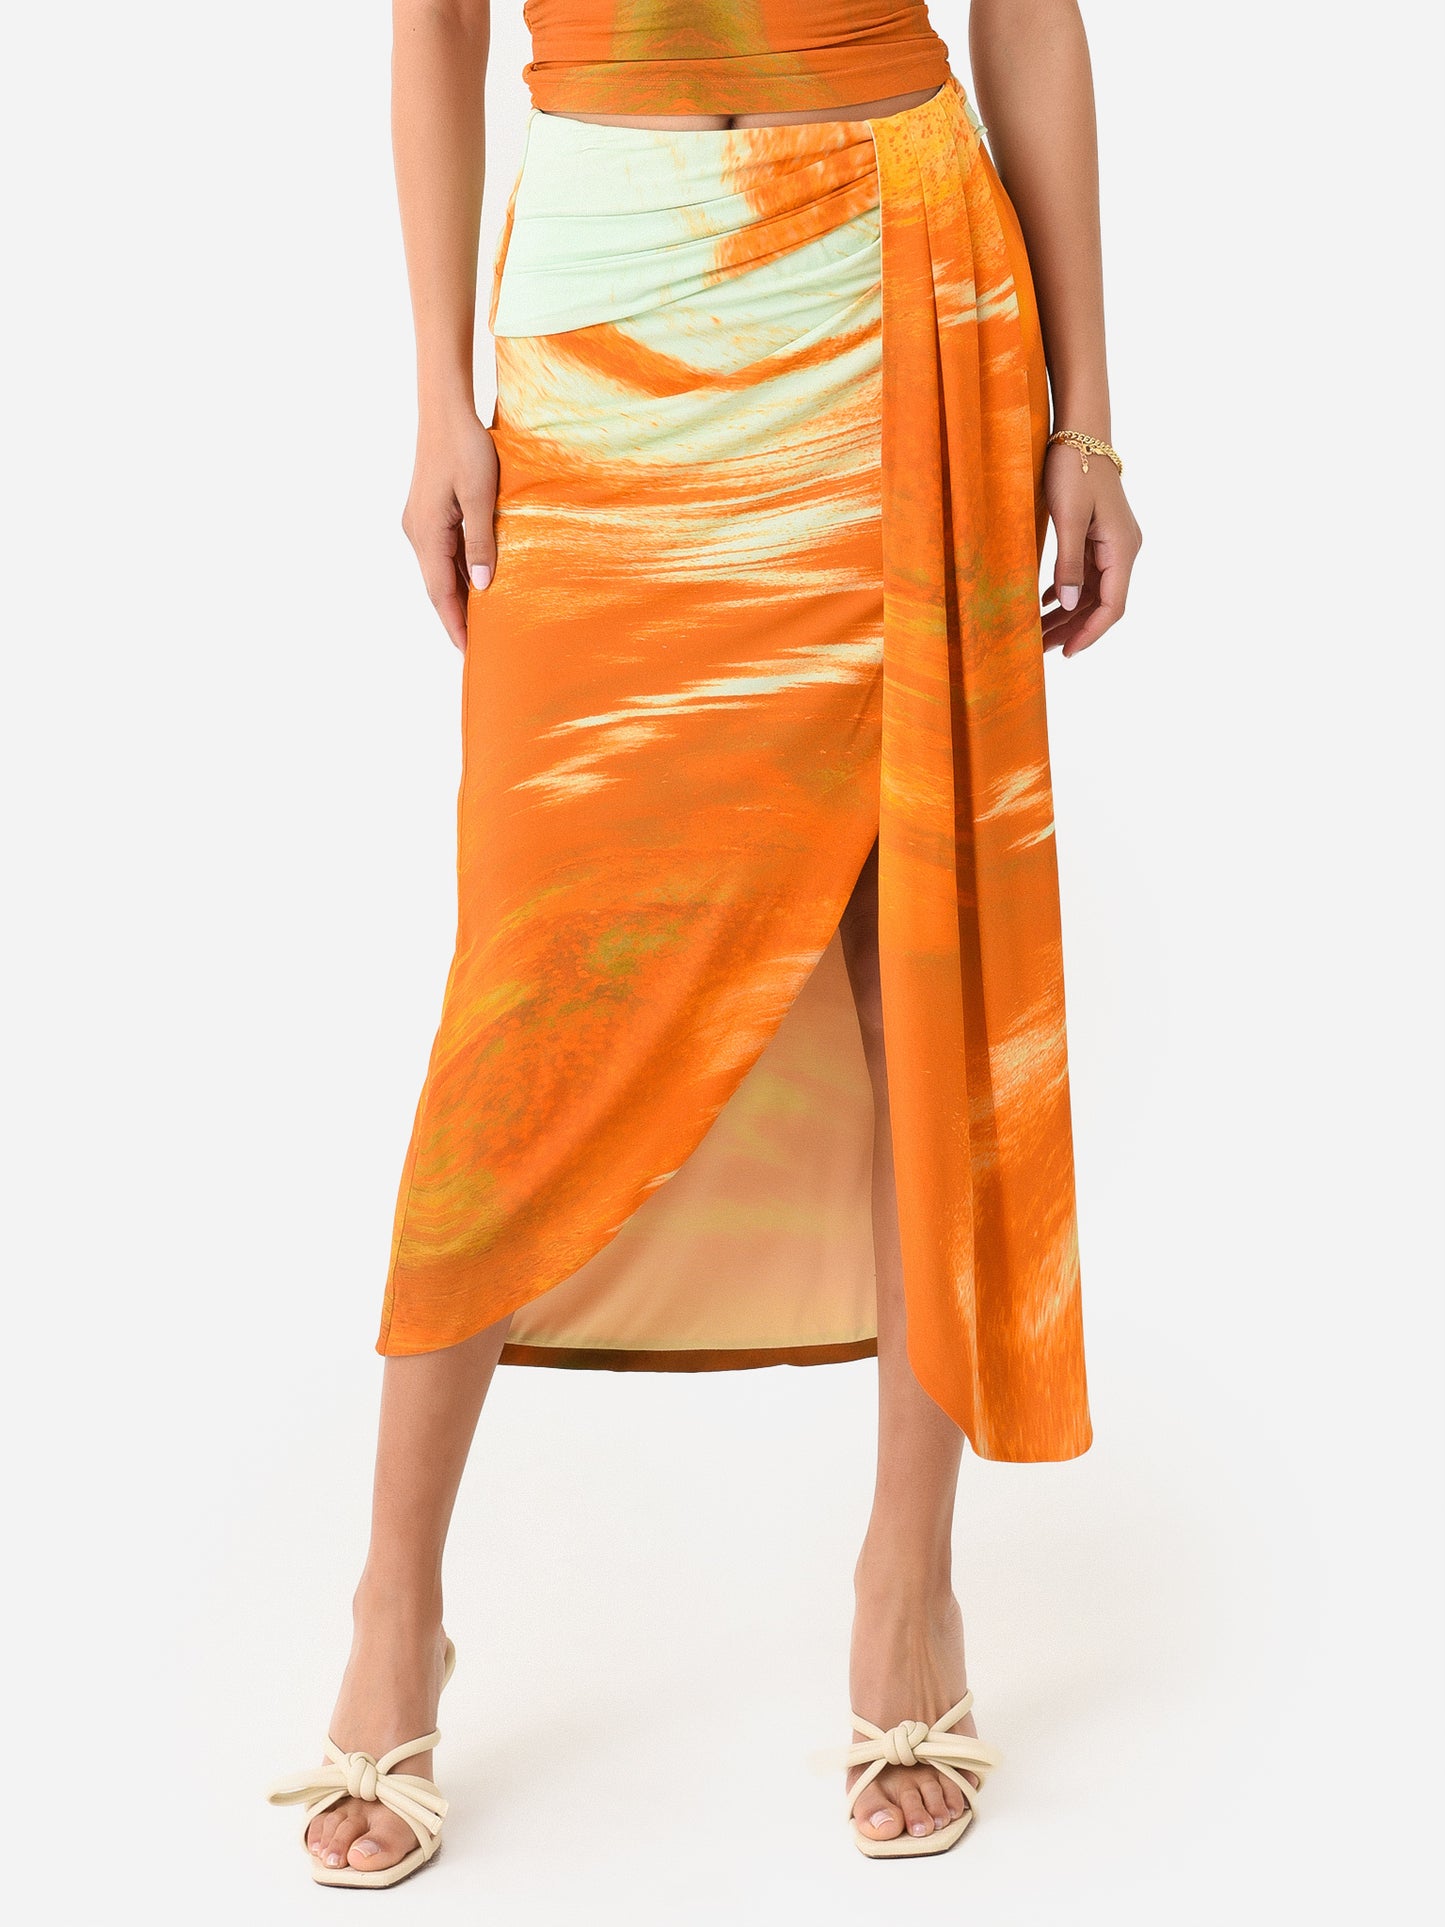 Simkhai Women's Gwena Printed Skirt